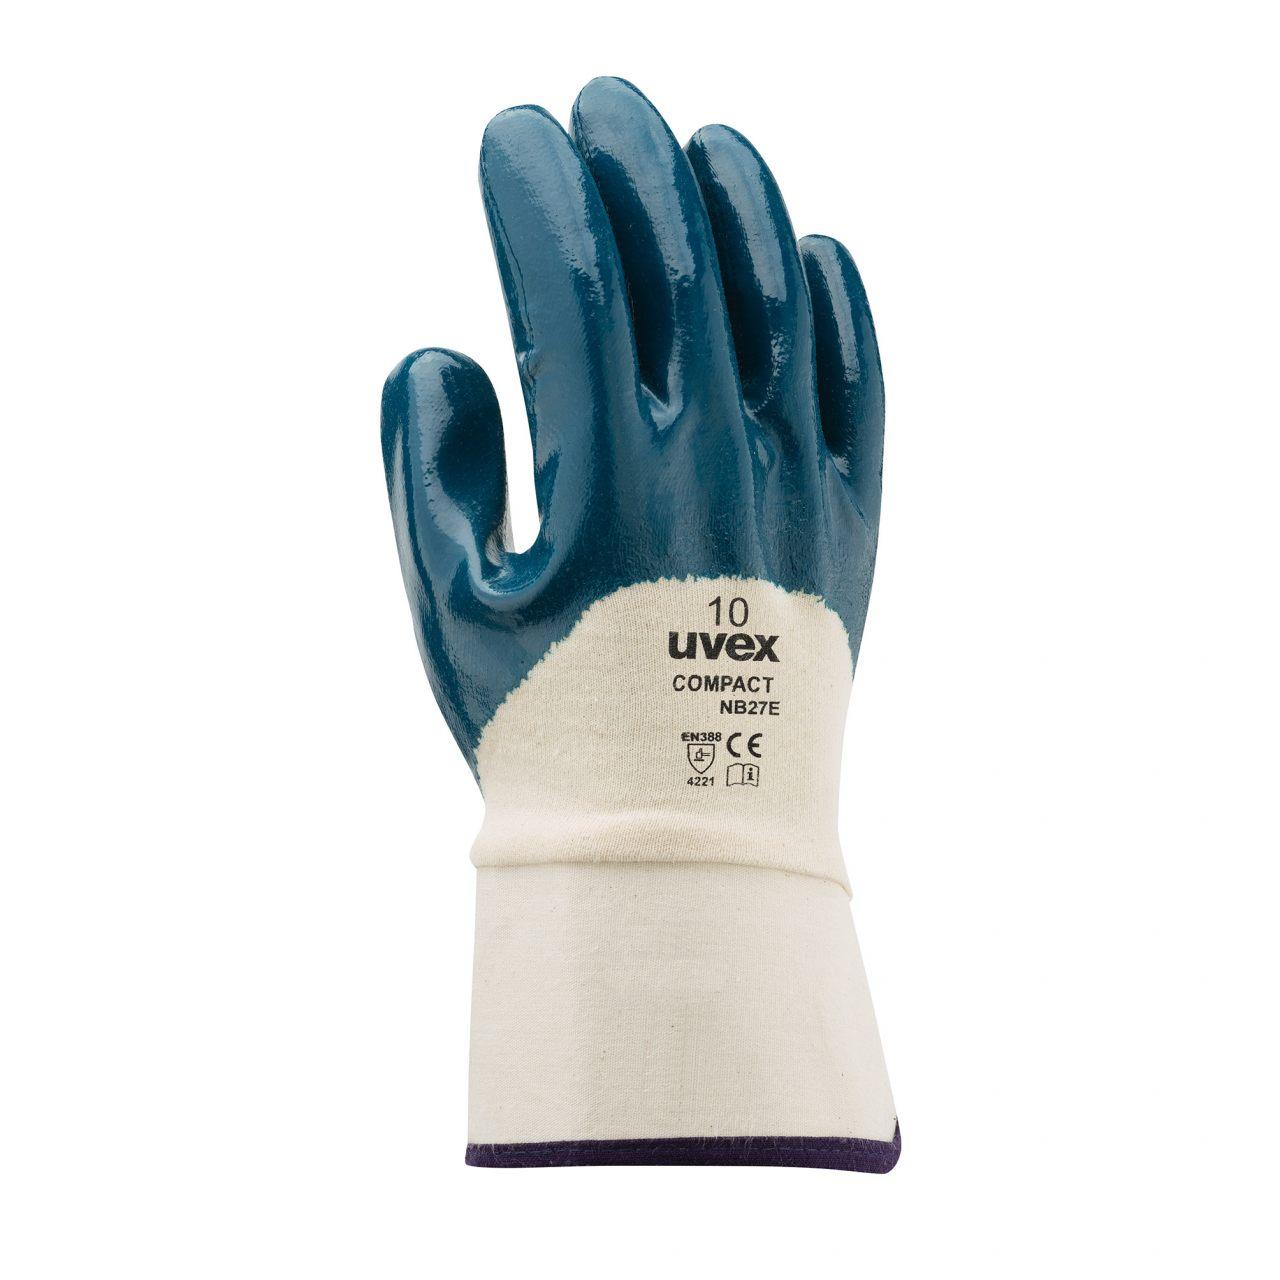 Защитные перчатки uvex компакт NB27E